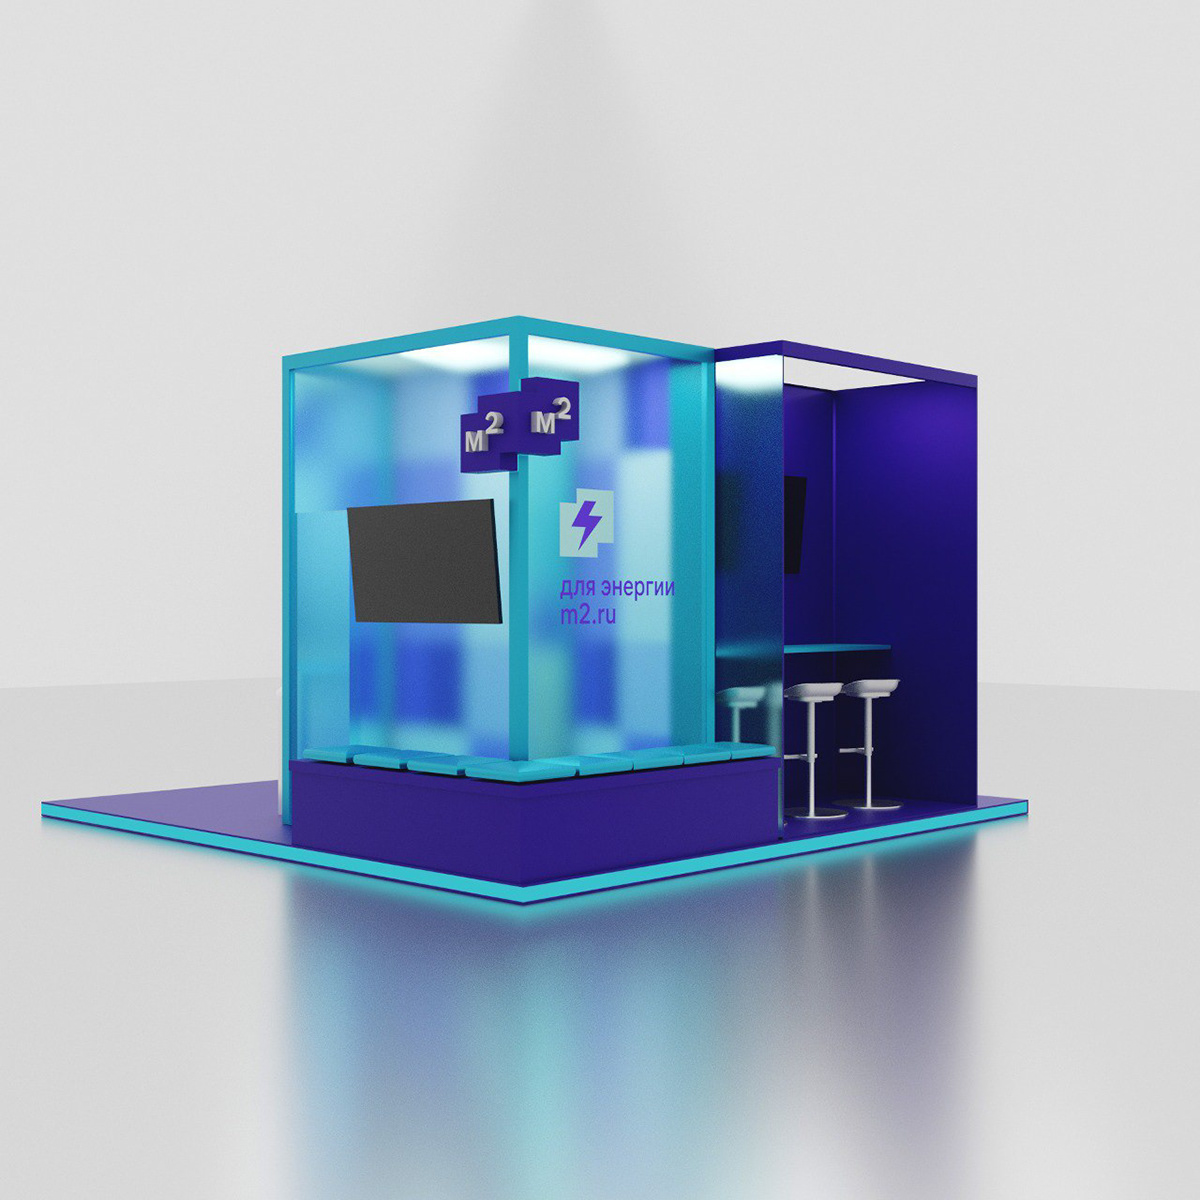 Exhibition Design  Stand Exhibition  3D visualization Render modern exhibition stand booth design Trade Show